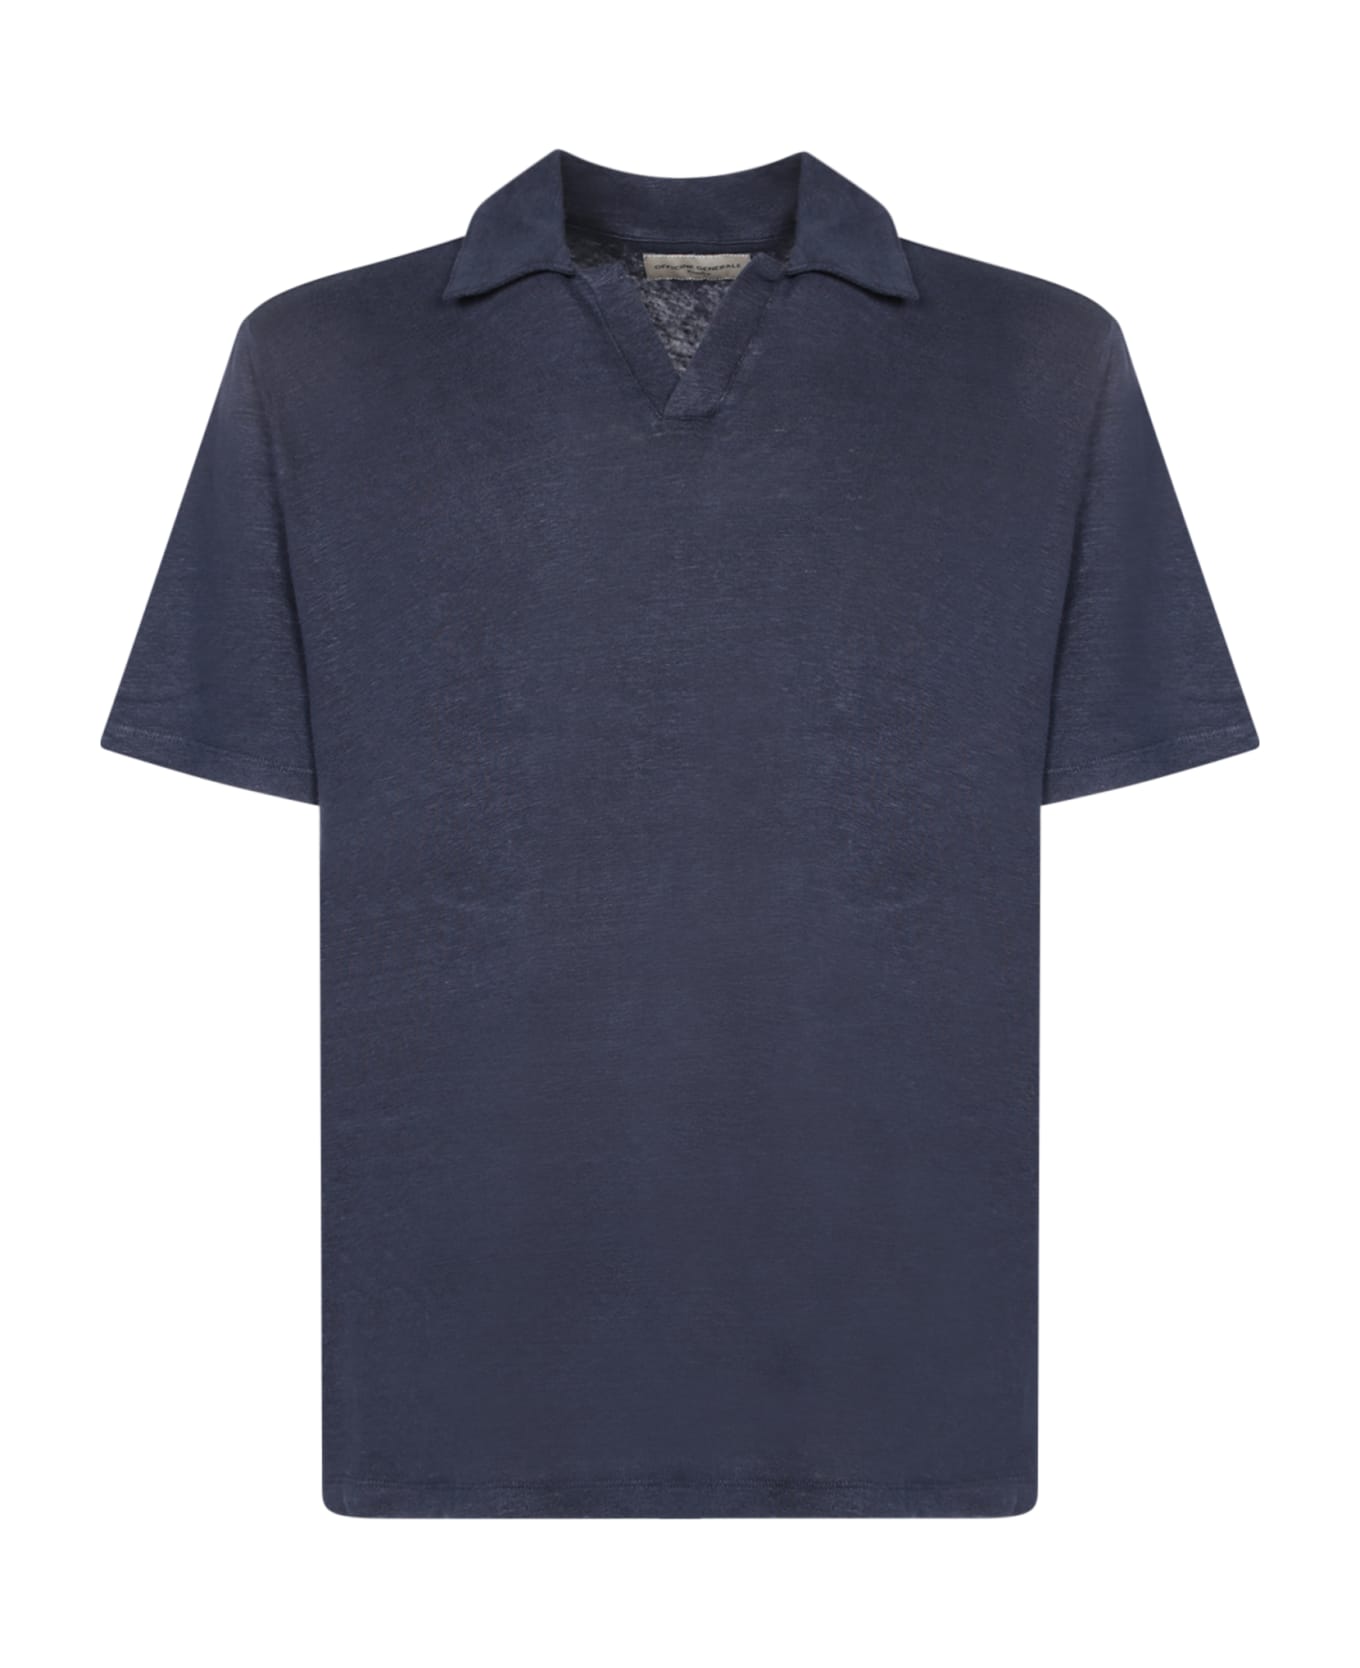 Officine Générale Short Sleeves Blue Polo Shirt - Blue ポロシャツ